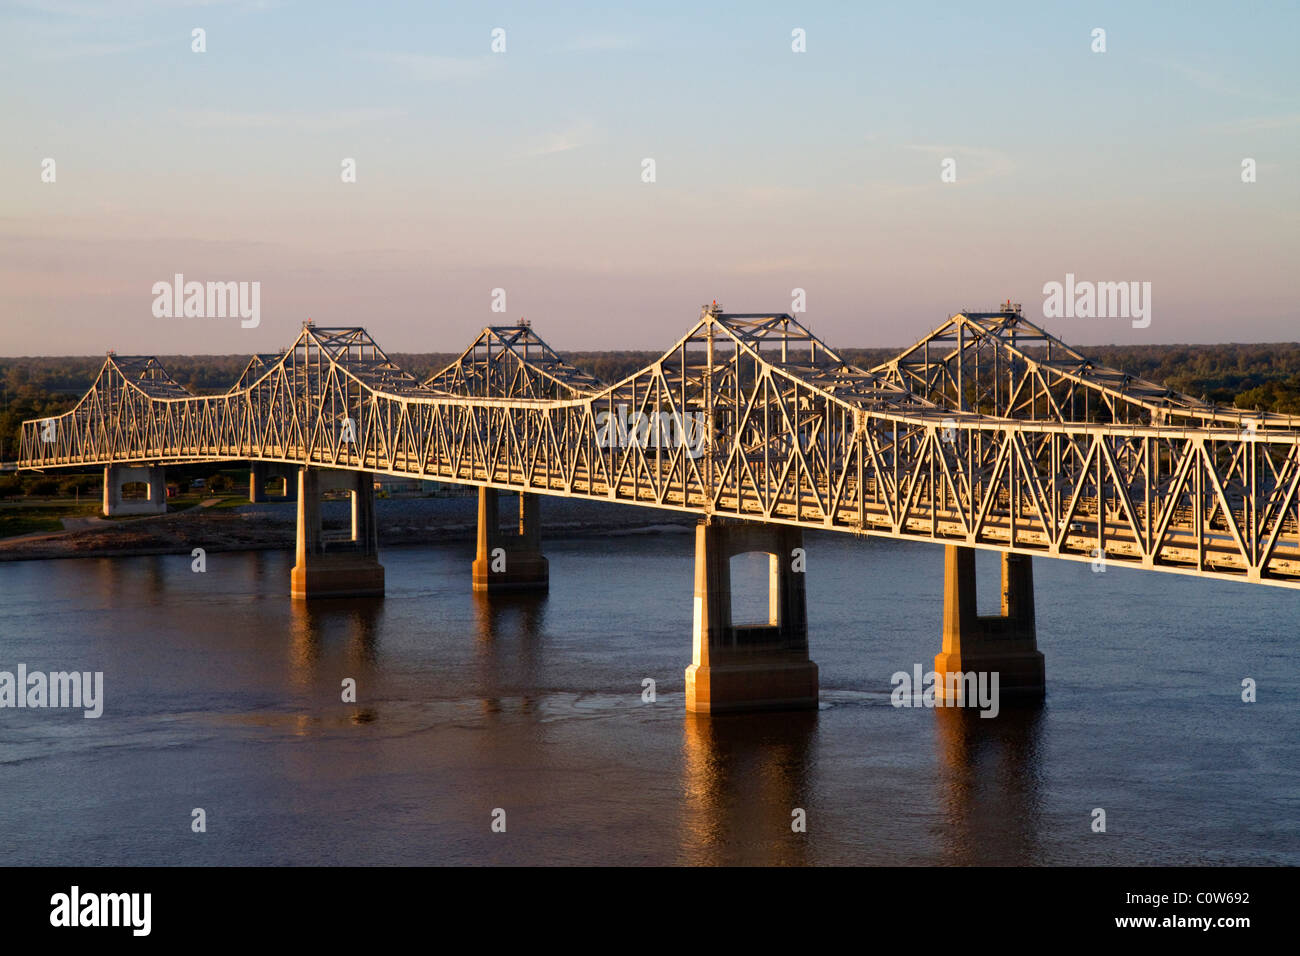 The Natchez-Vidalia Bridges spanning the Mississippi River between Vidalia, Louisiana and Natchez, Mississippi, USA. Stock Photo